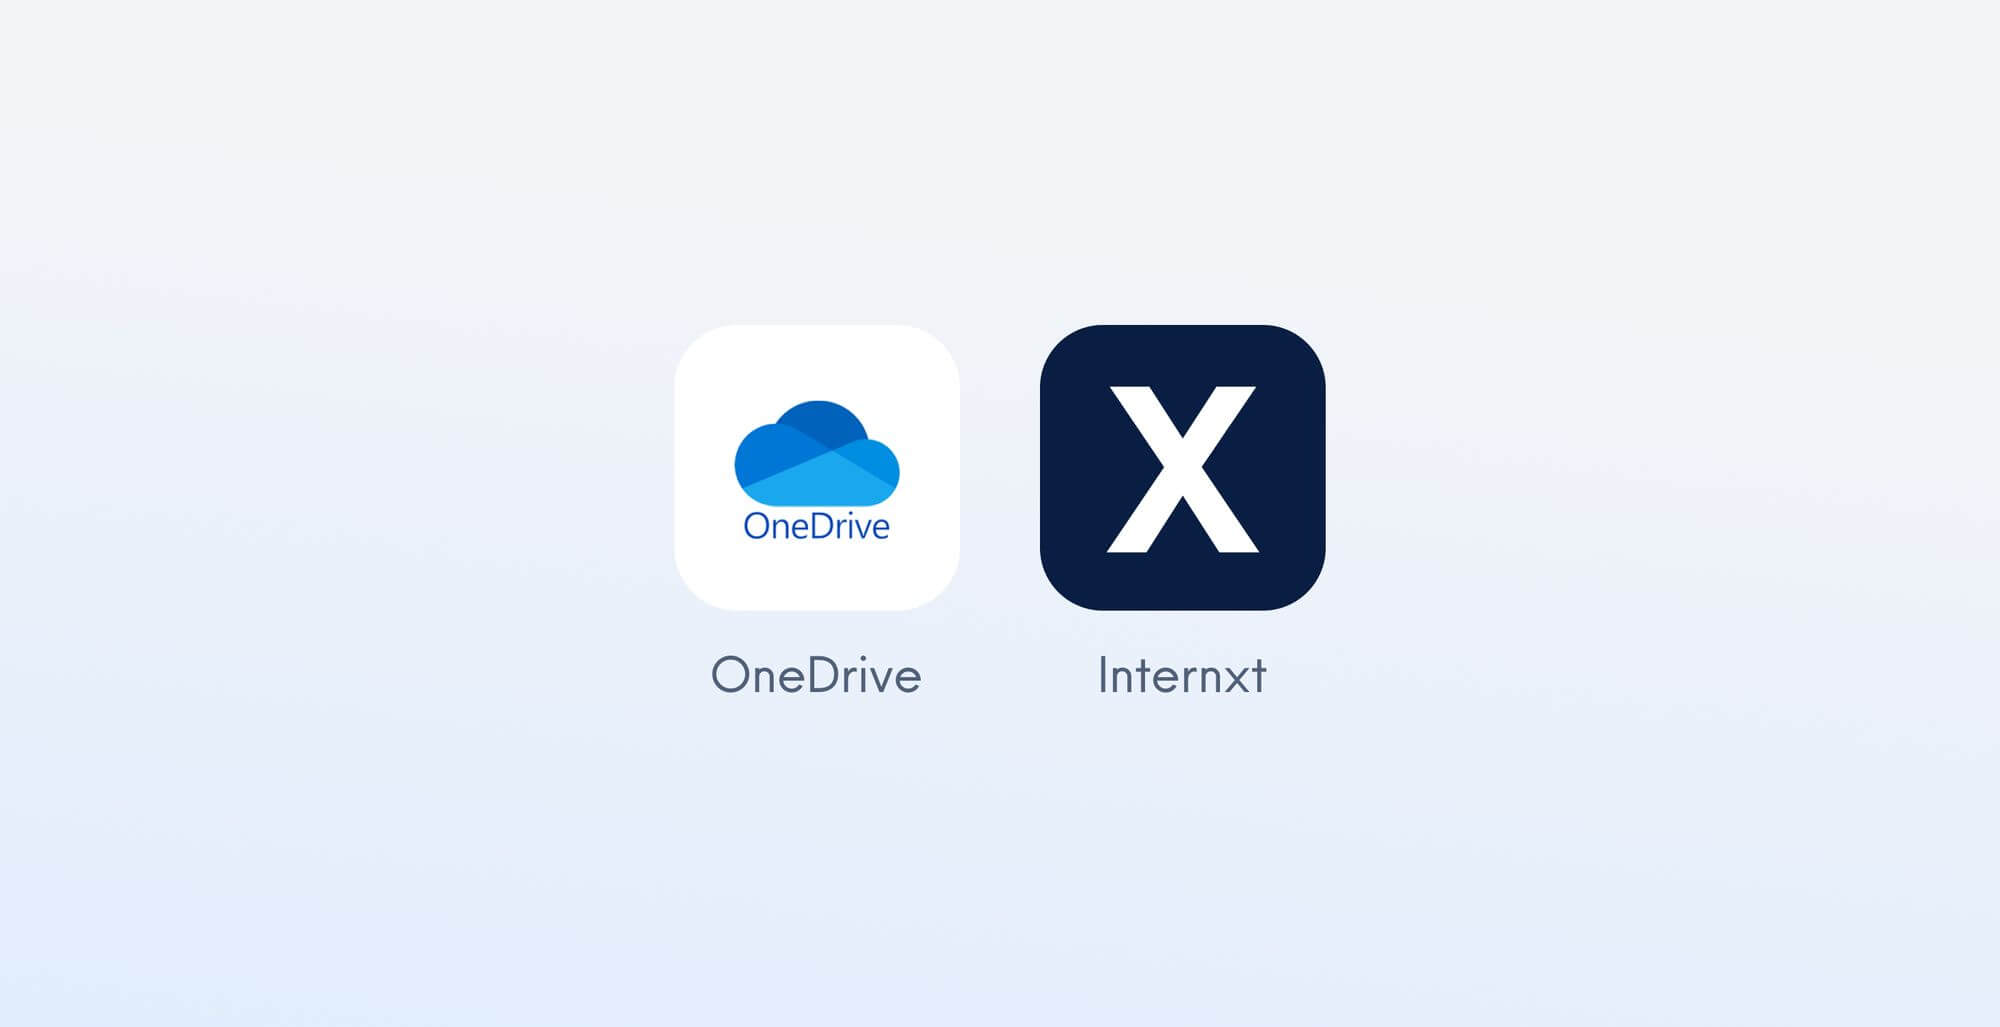 Logo de Internxt y logo de Microsoft OneDrive.